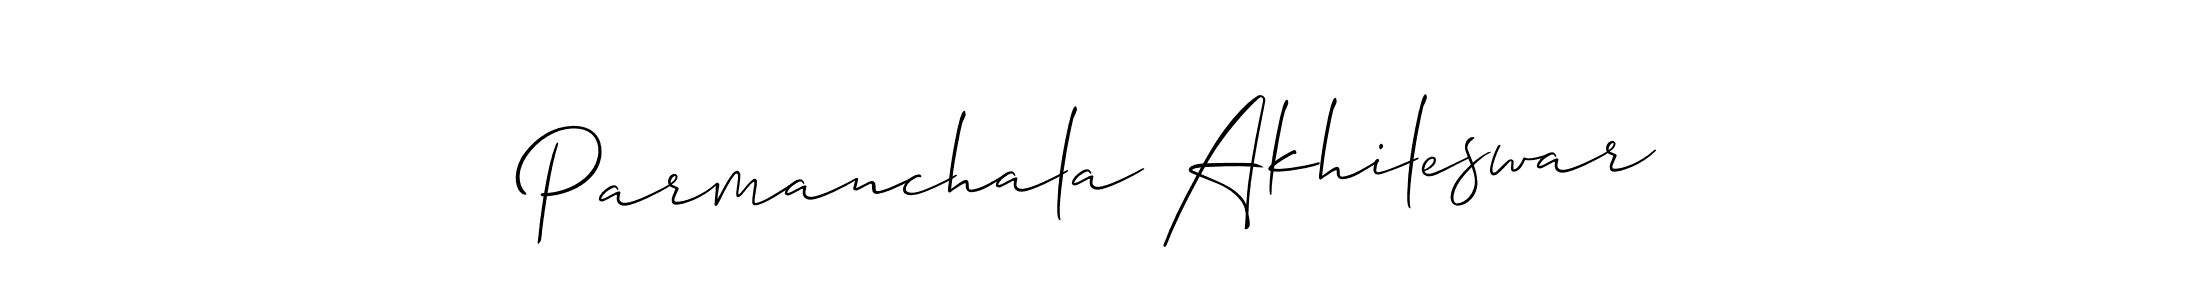 How to Draw Parmanchala Akhileswar signature style? Allison_Script is a latest design signature styles for name Parmanchala Akhileswar. Parmanchala Akhileswar signature style 2 images and pictures png